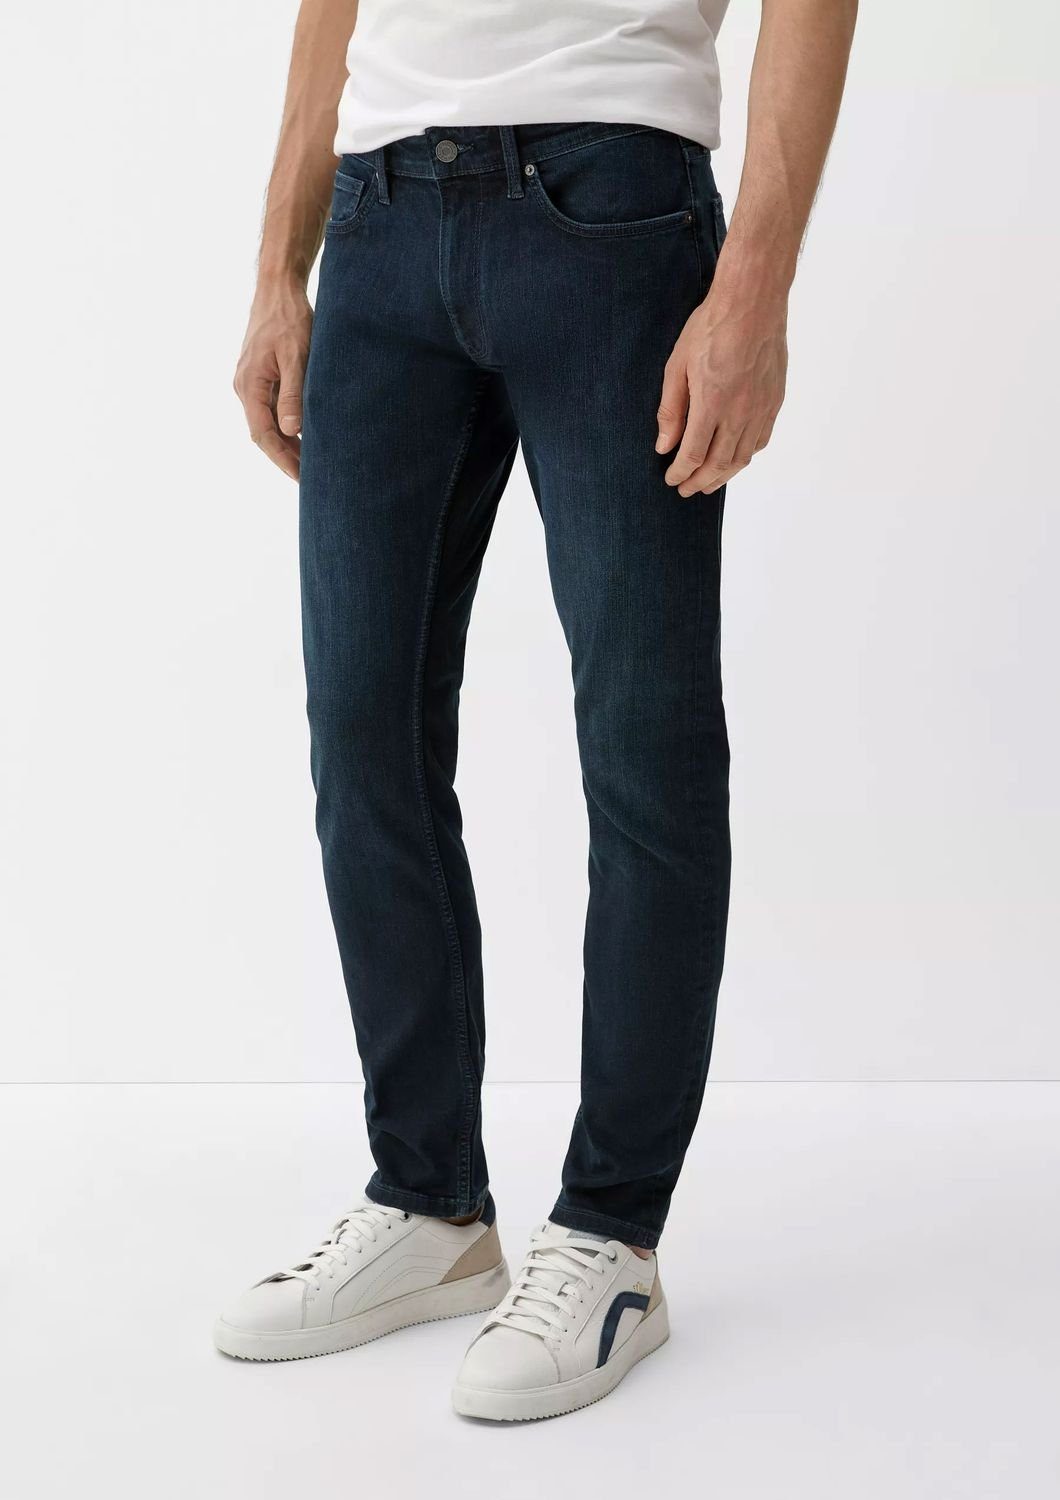 Leg s.Oliver Dunkelblau Slim Medium rise, Bundhöhe: Beinverlauf: Straight Slim-fit-Jeans KEITH Fit,